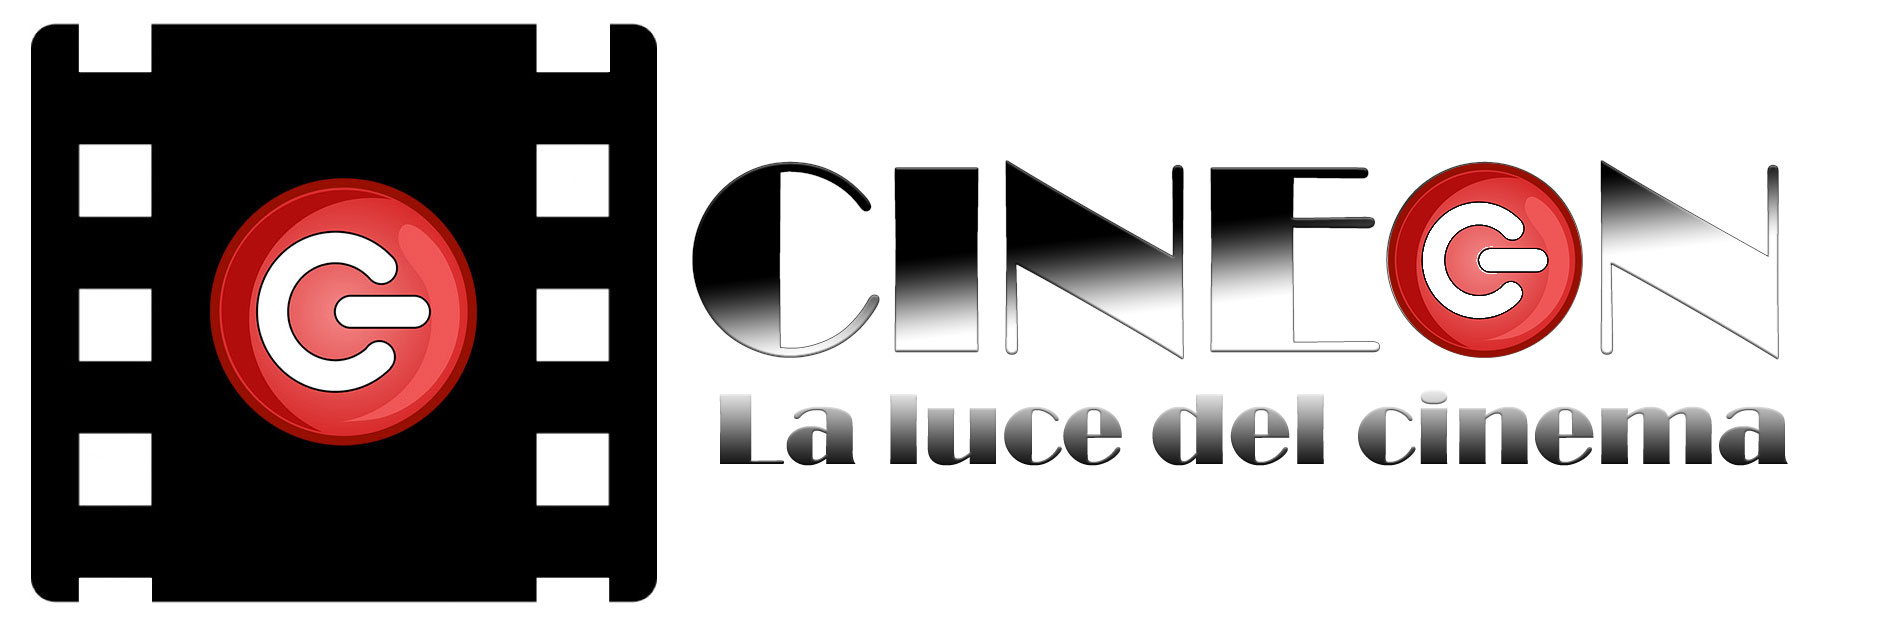 Cineon.it logo